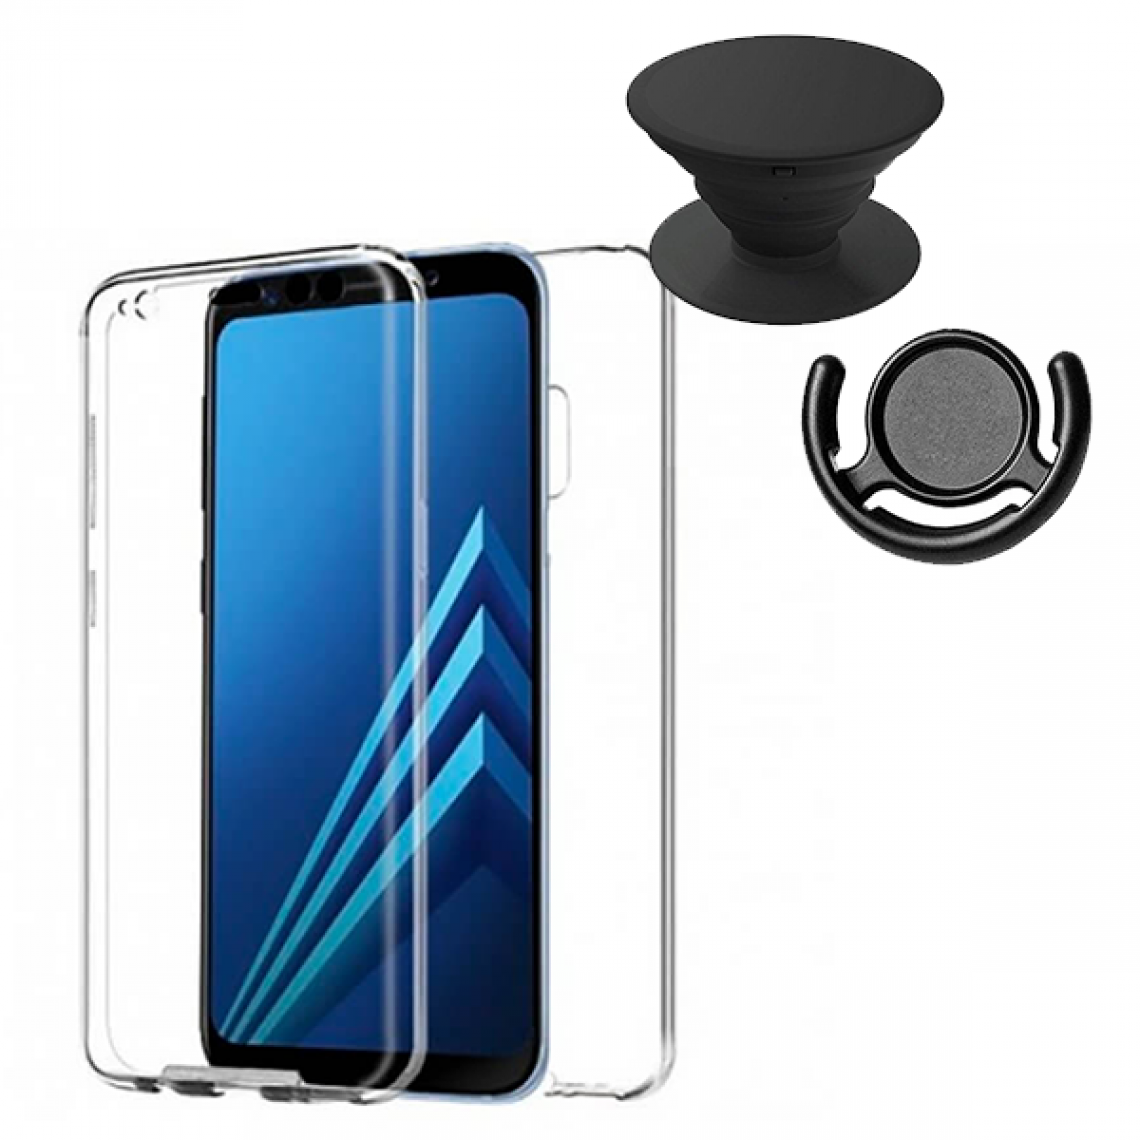 Phonecare - Kit Coque 3x1 360° Impact Protection + 1 PopSocket + 1 Support PopSocket Noir - Impact Protection - Samsung A5/A8 2018 - Coque, étui smartphone